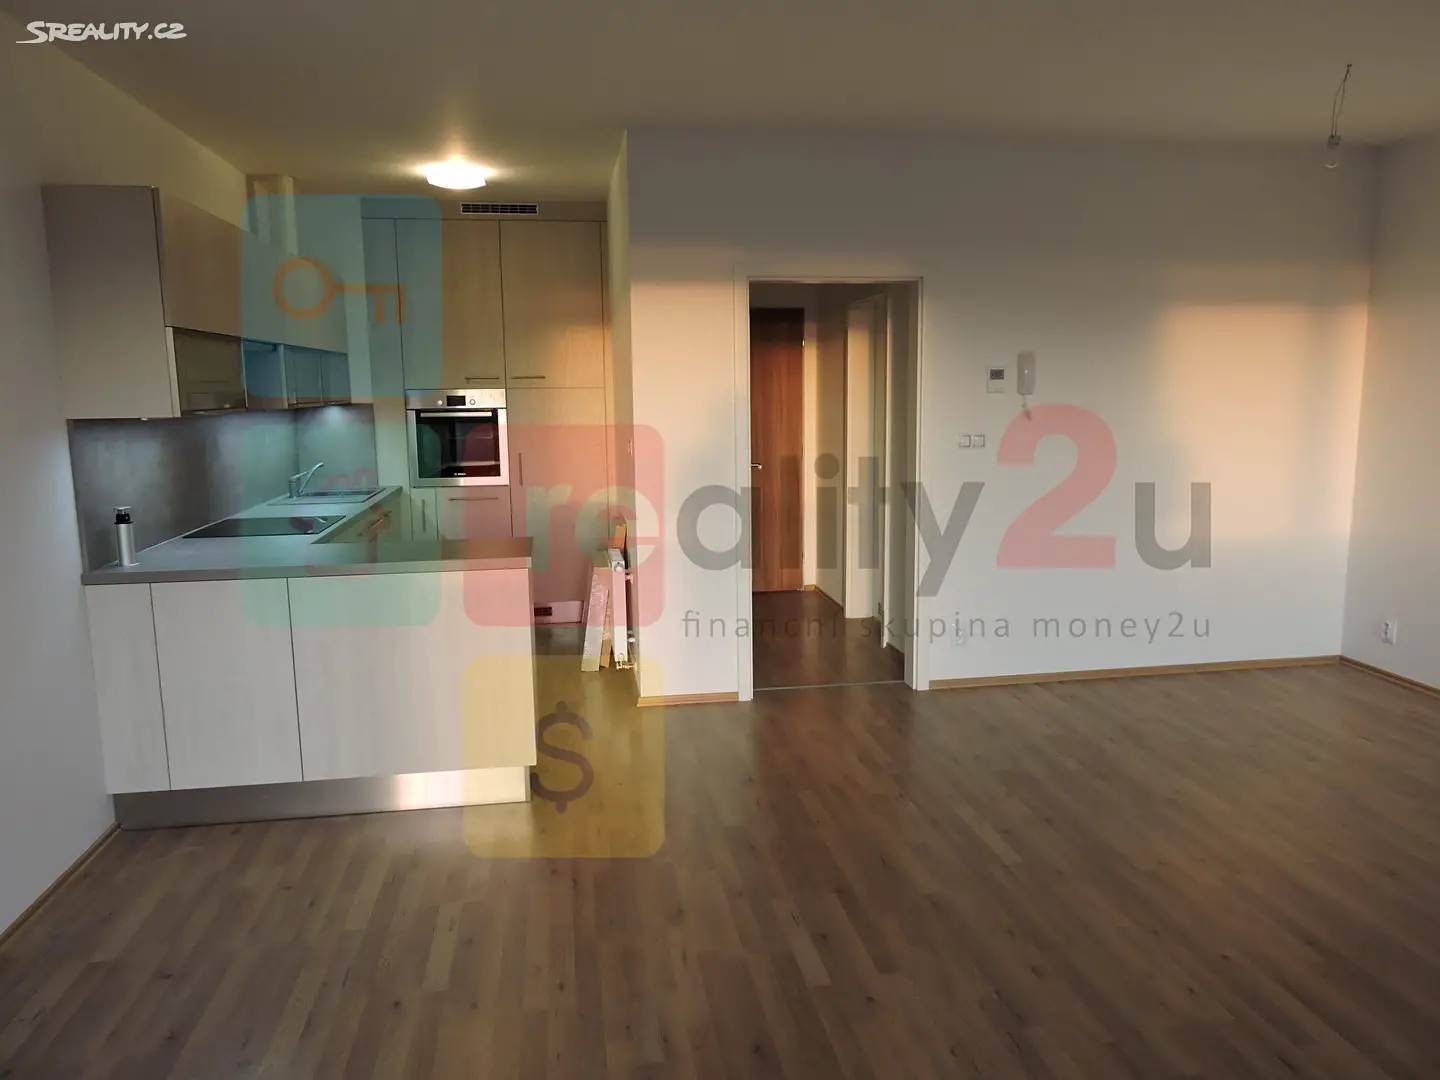 Prodej bytu 1+kk 51 m², Brno - Slatina, okres Brno-město